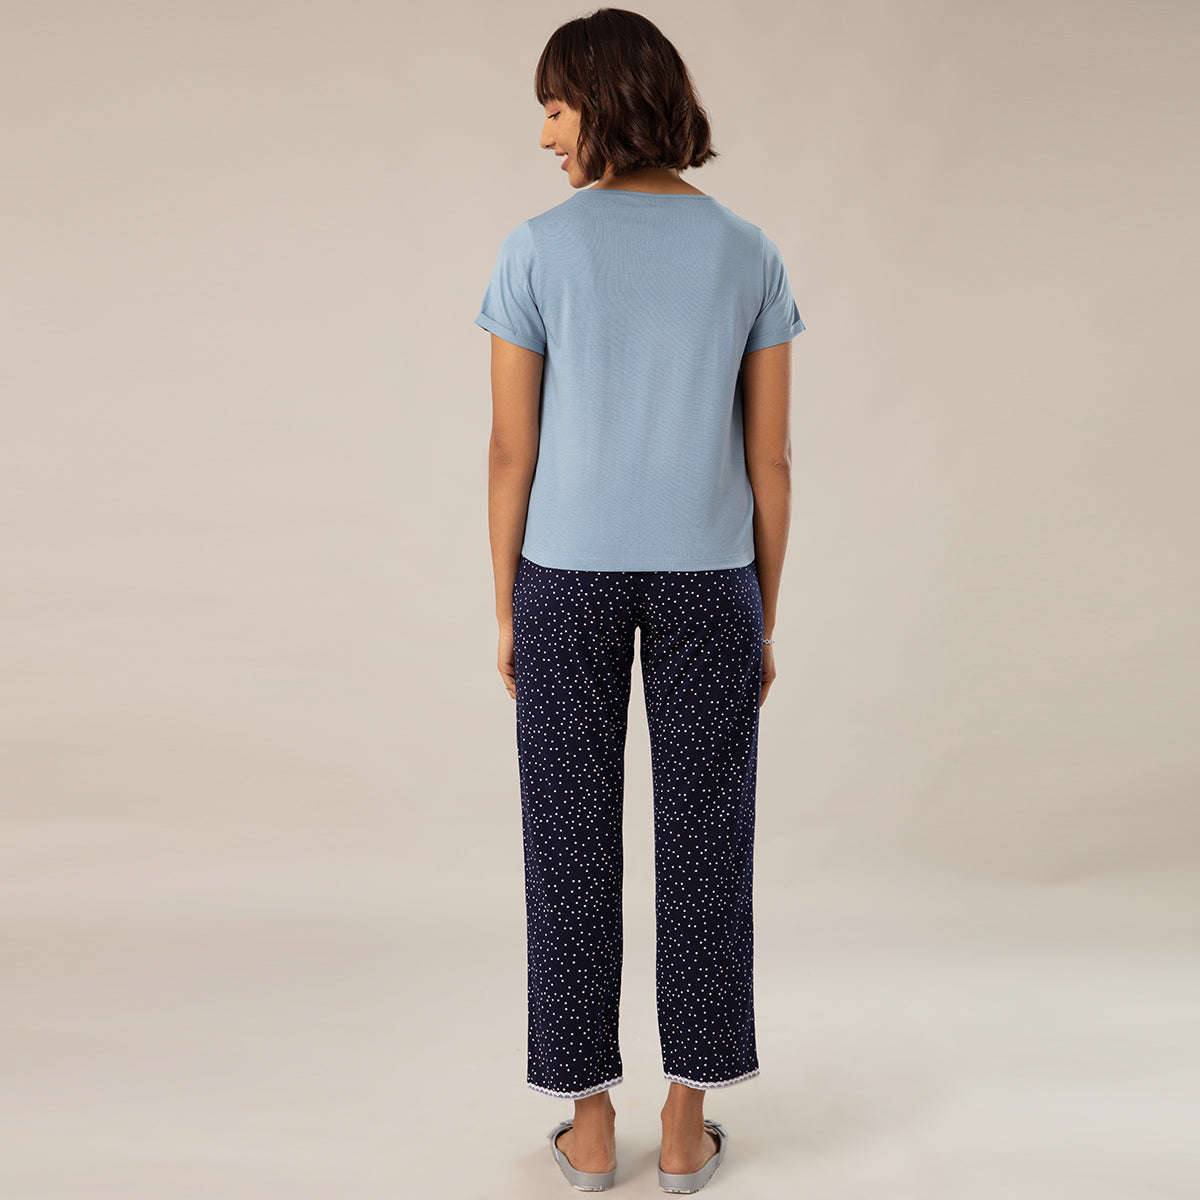 Super Fine Cotton Cosy Pajama Set - NYS108 Polka Dot